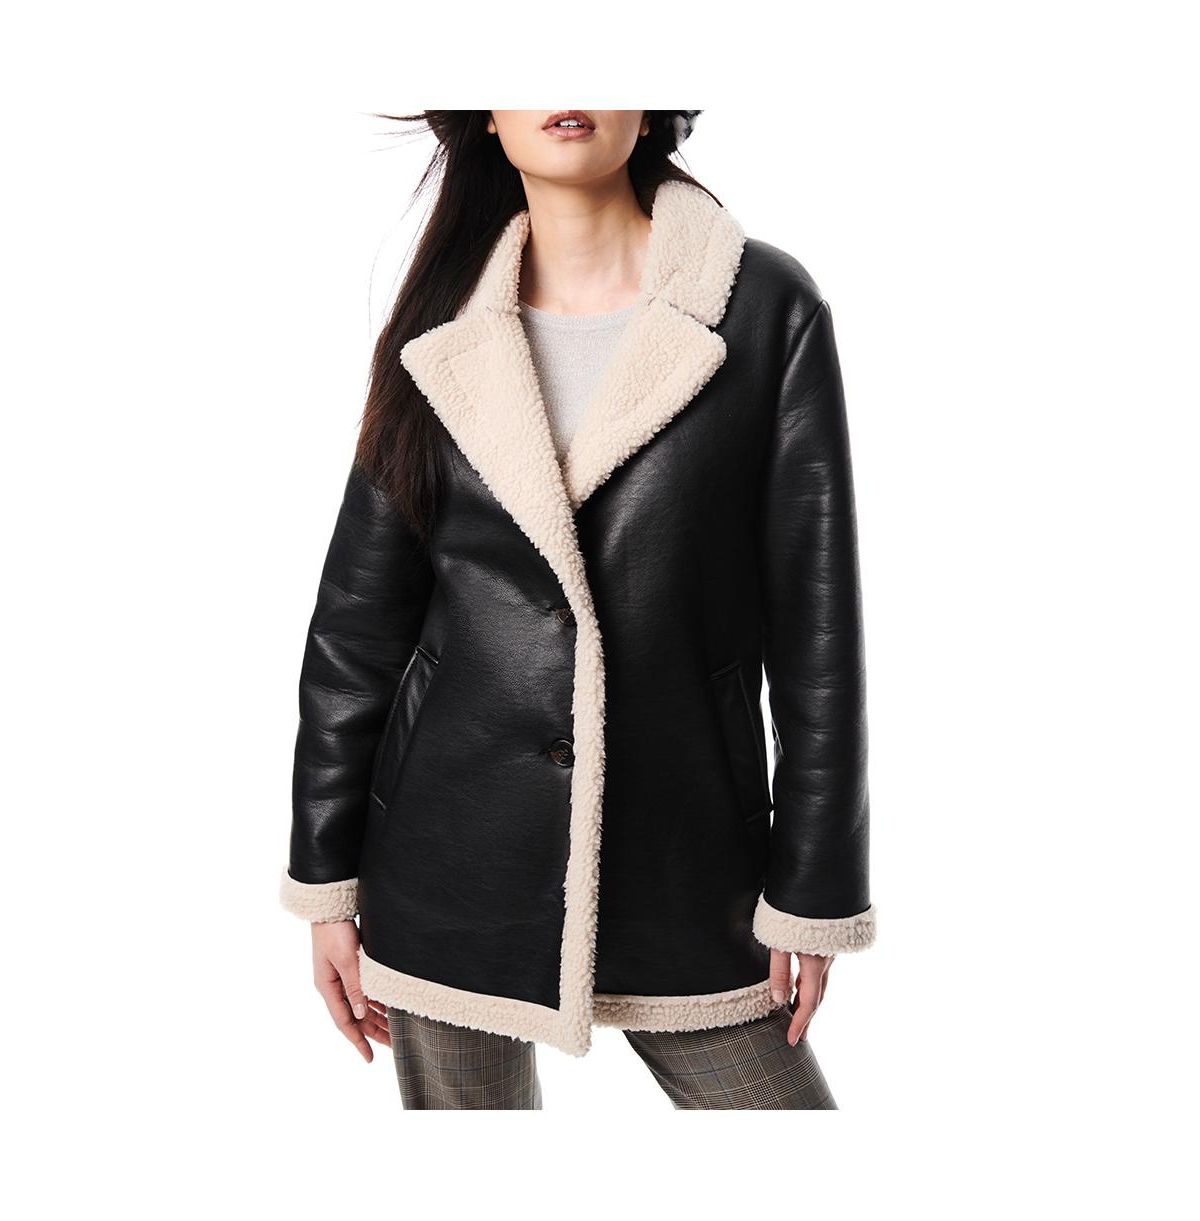 Women's Sherpa Lined Faux Leather Jacket - Black/cream